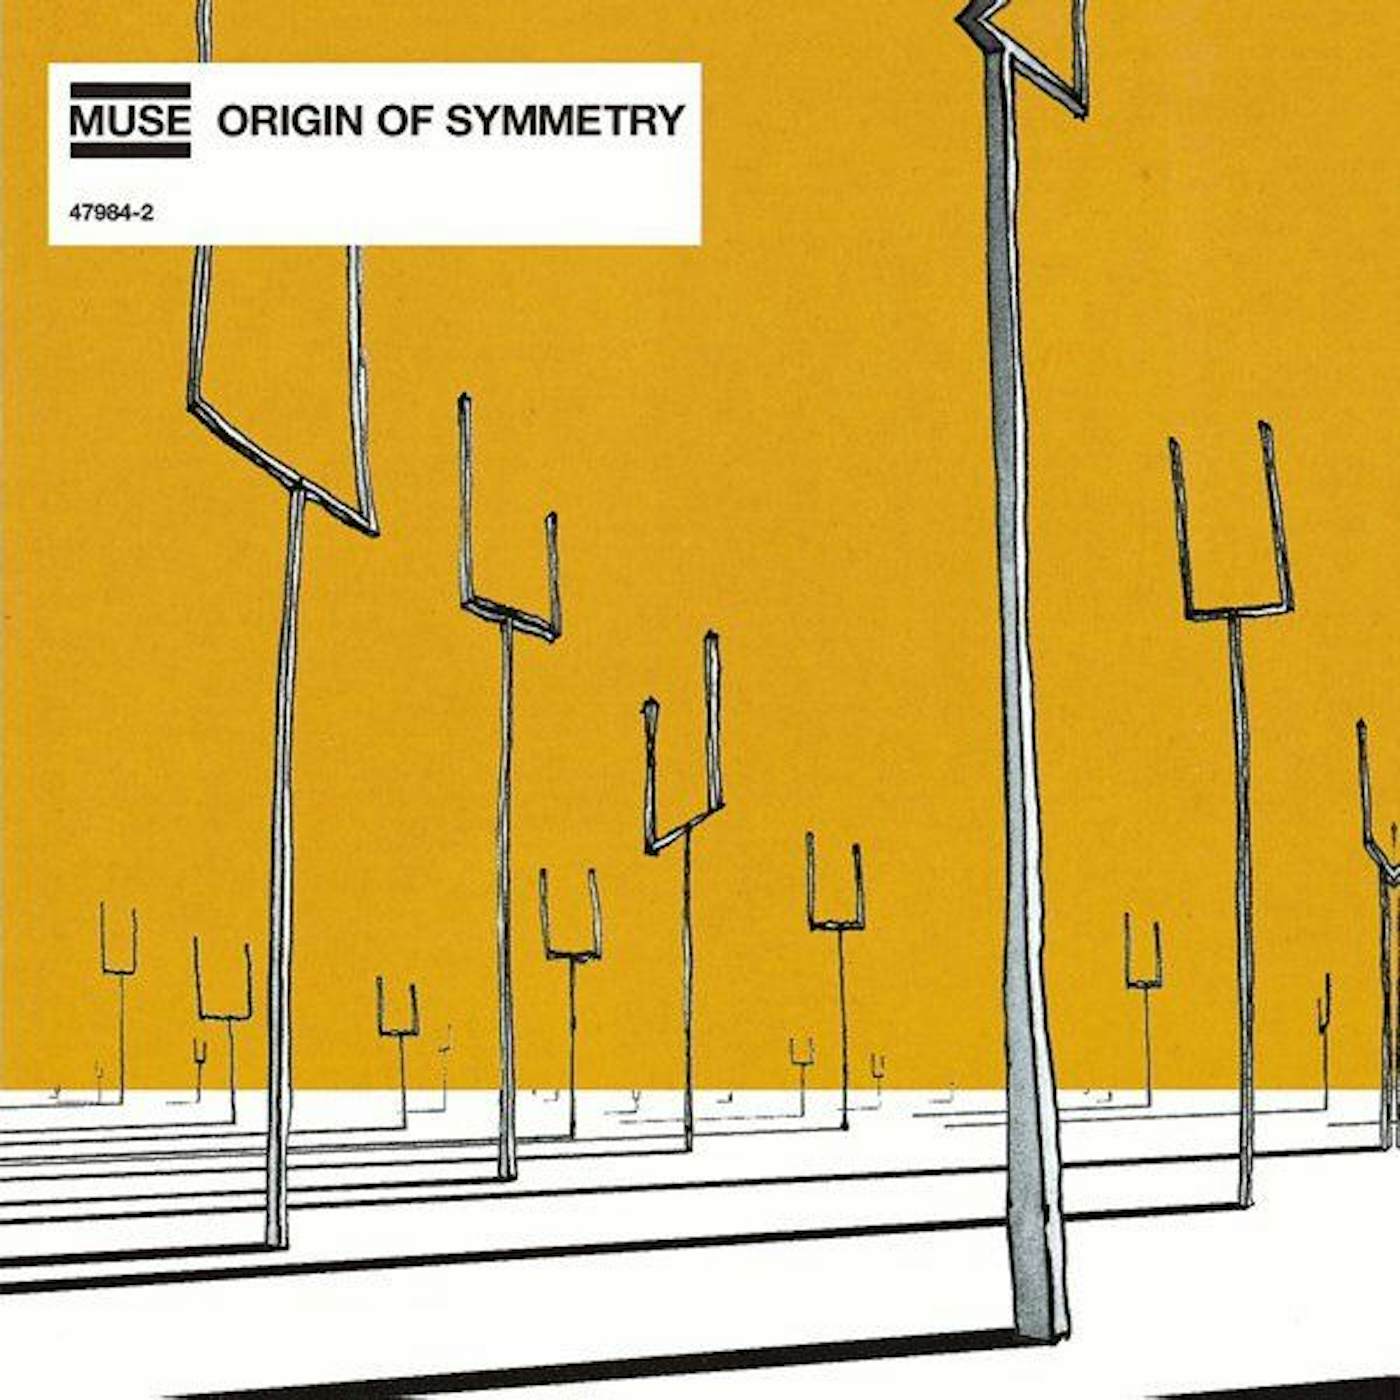 Muse Origin of Symmetry Vinyl Record